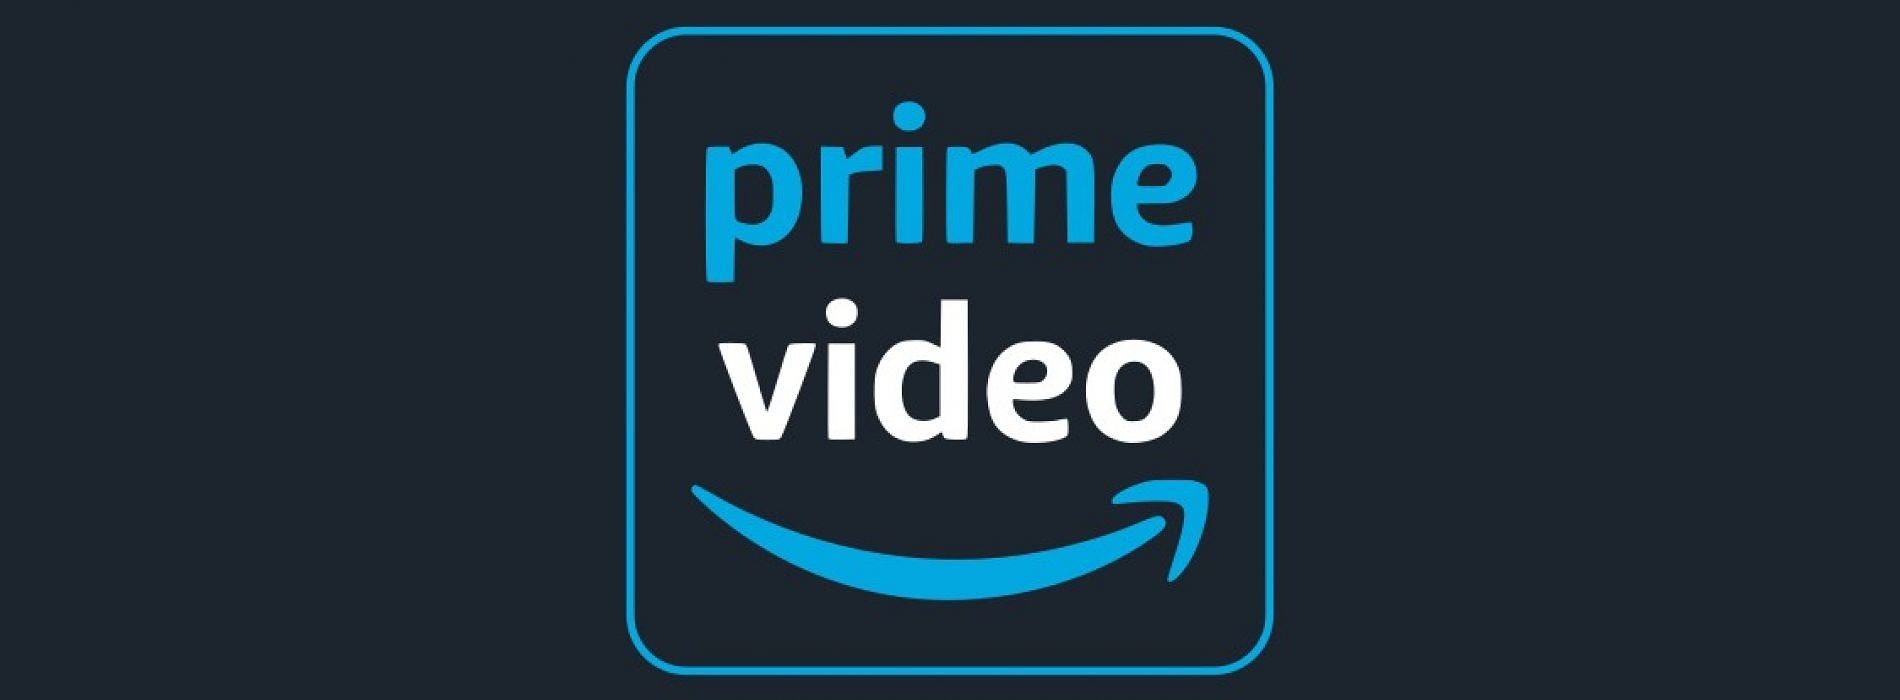 Amazon Prime Video finally gets Profiles just like Netflix